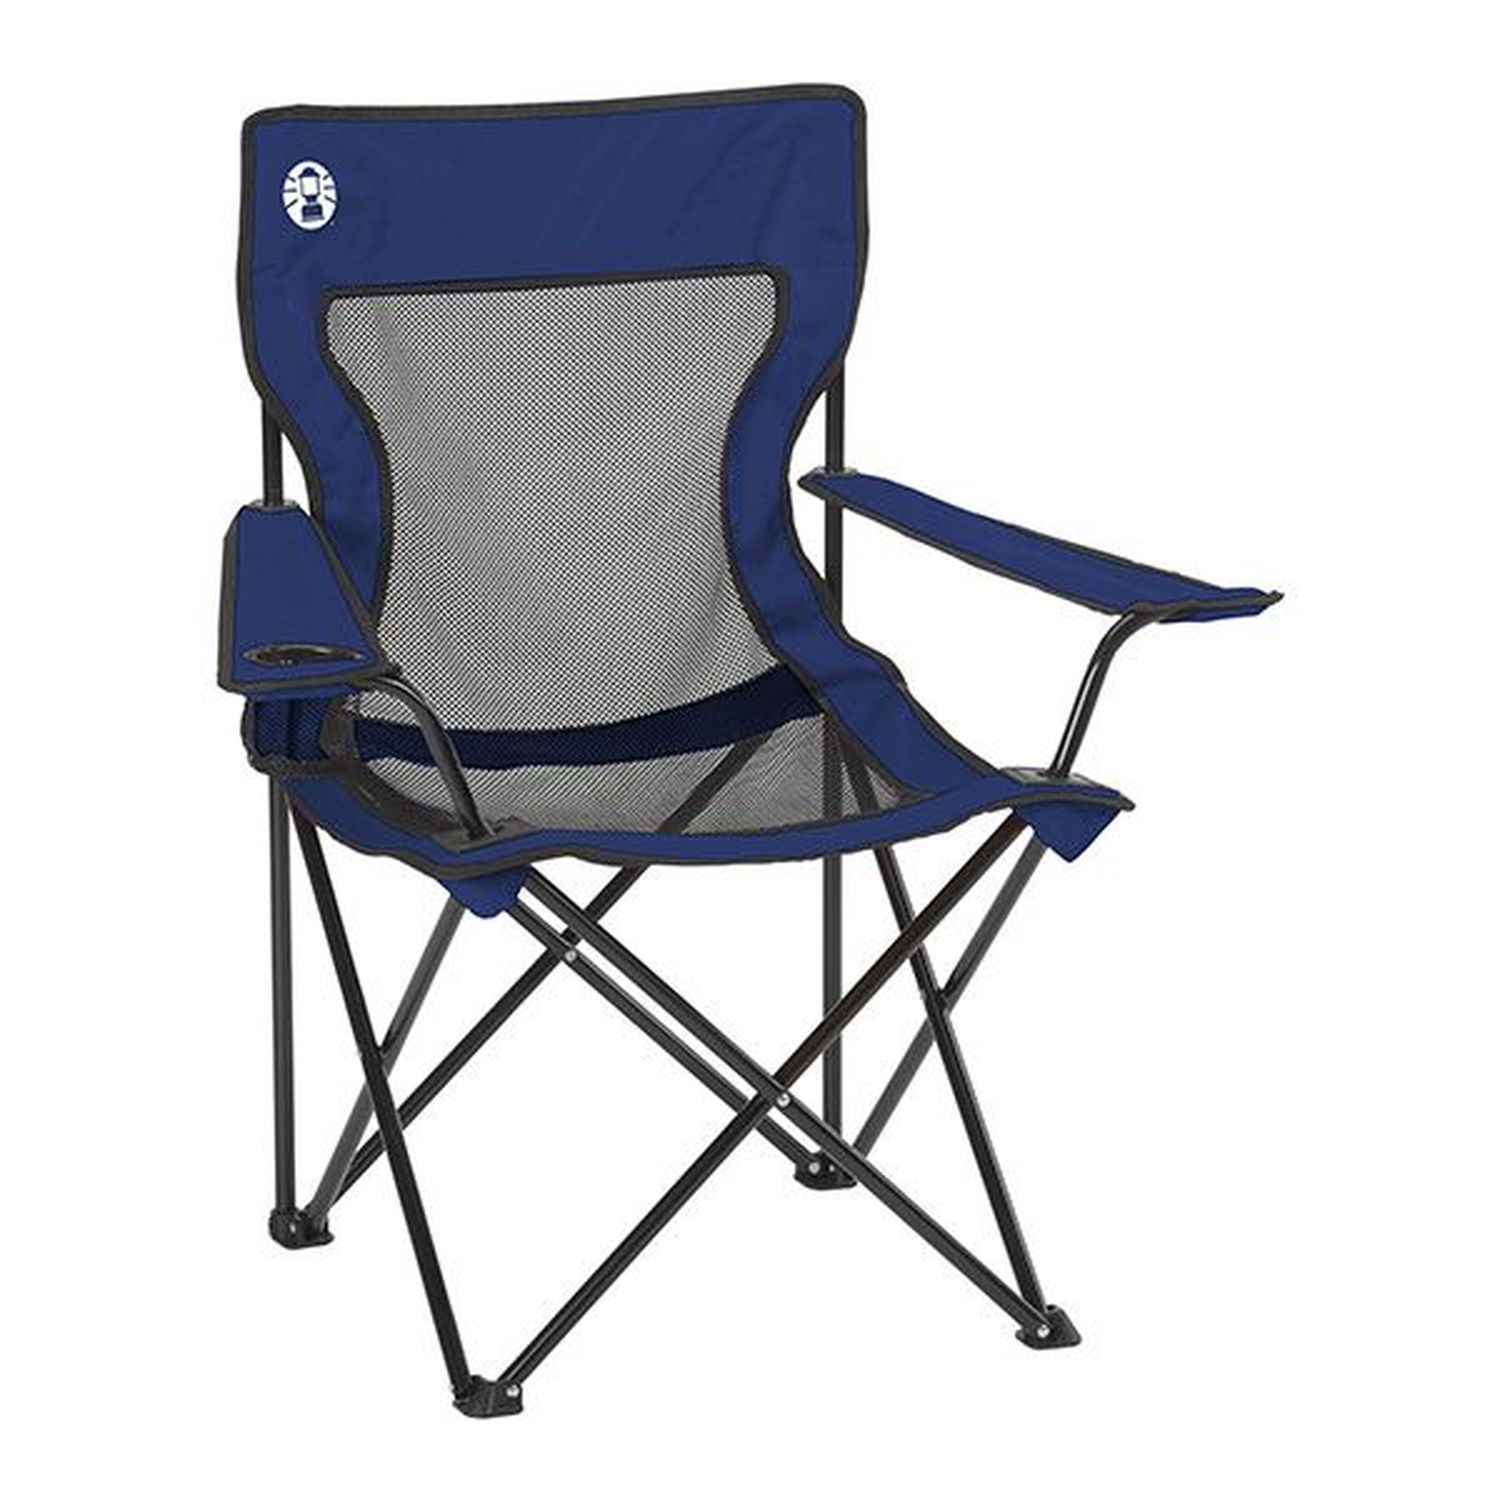 Coleman® Mesh Quad Chair